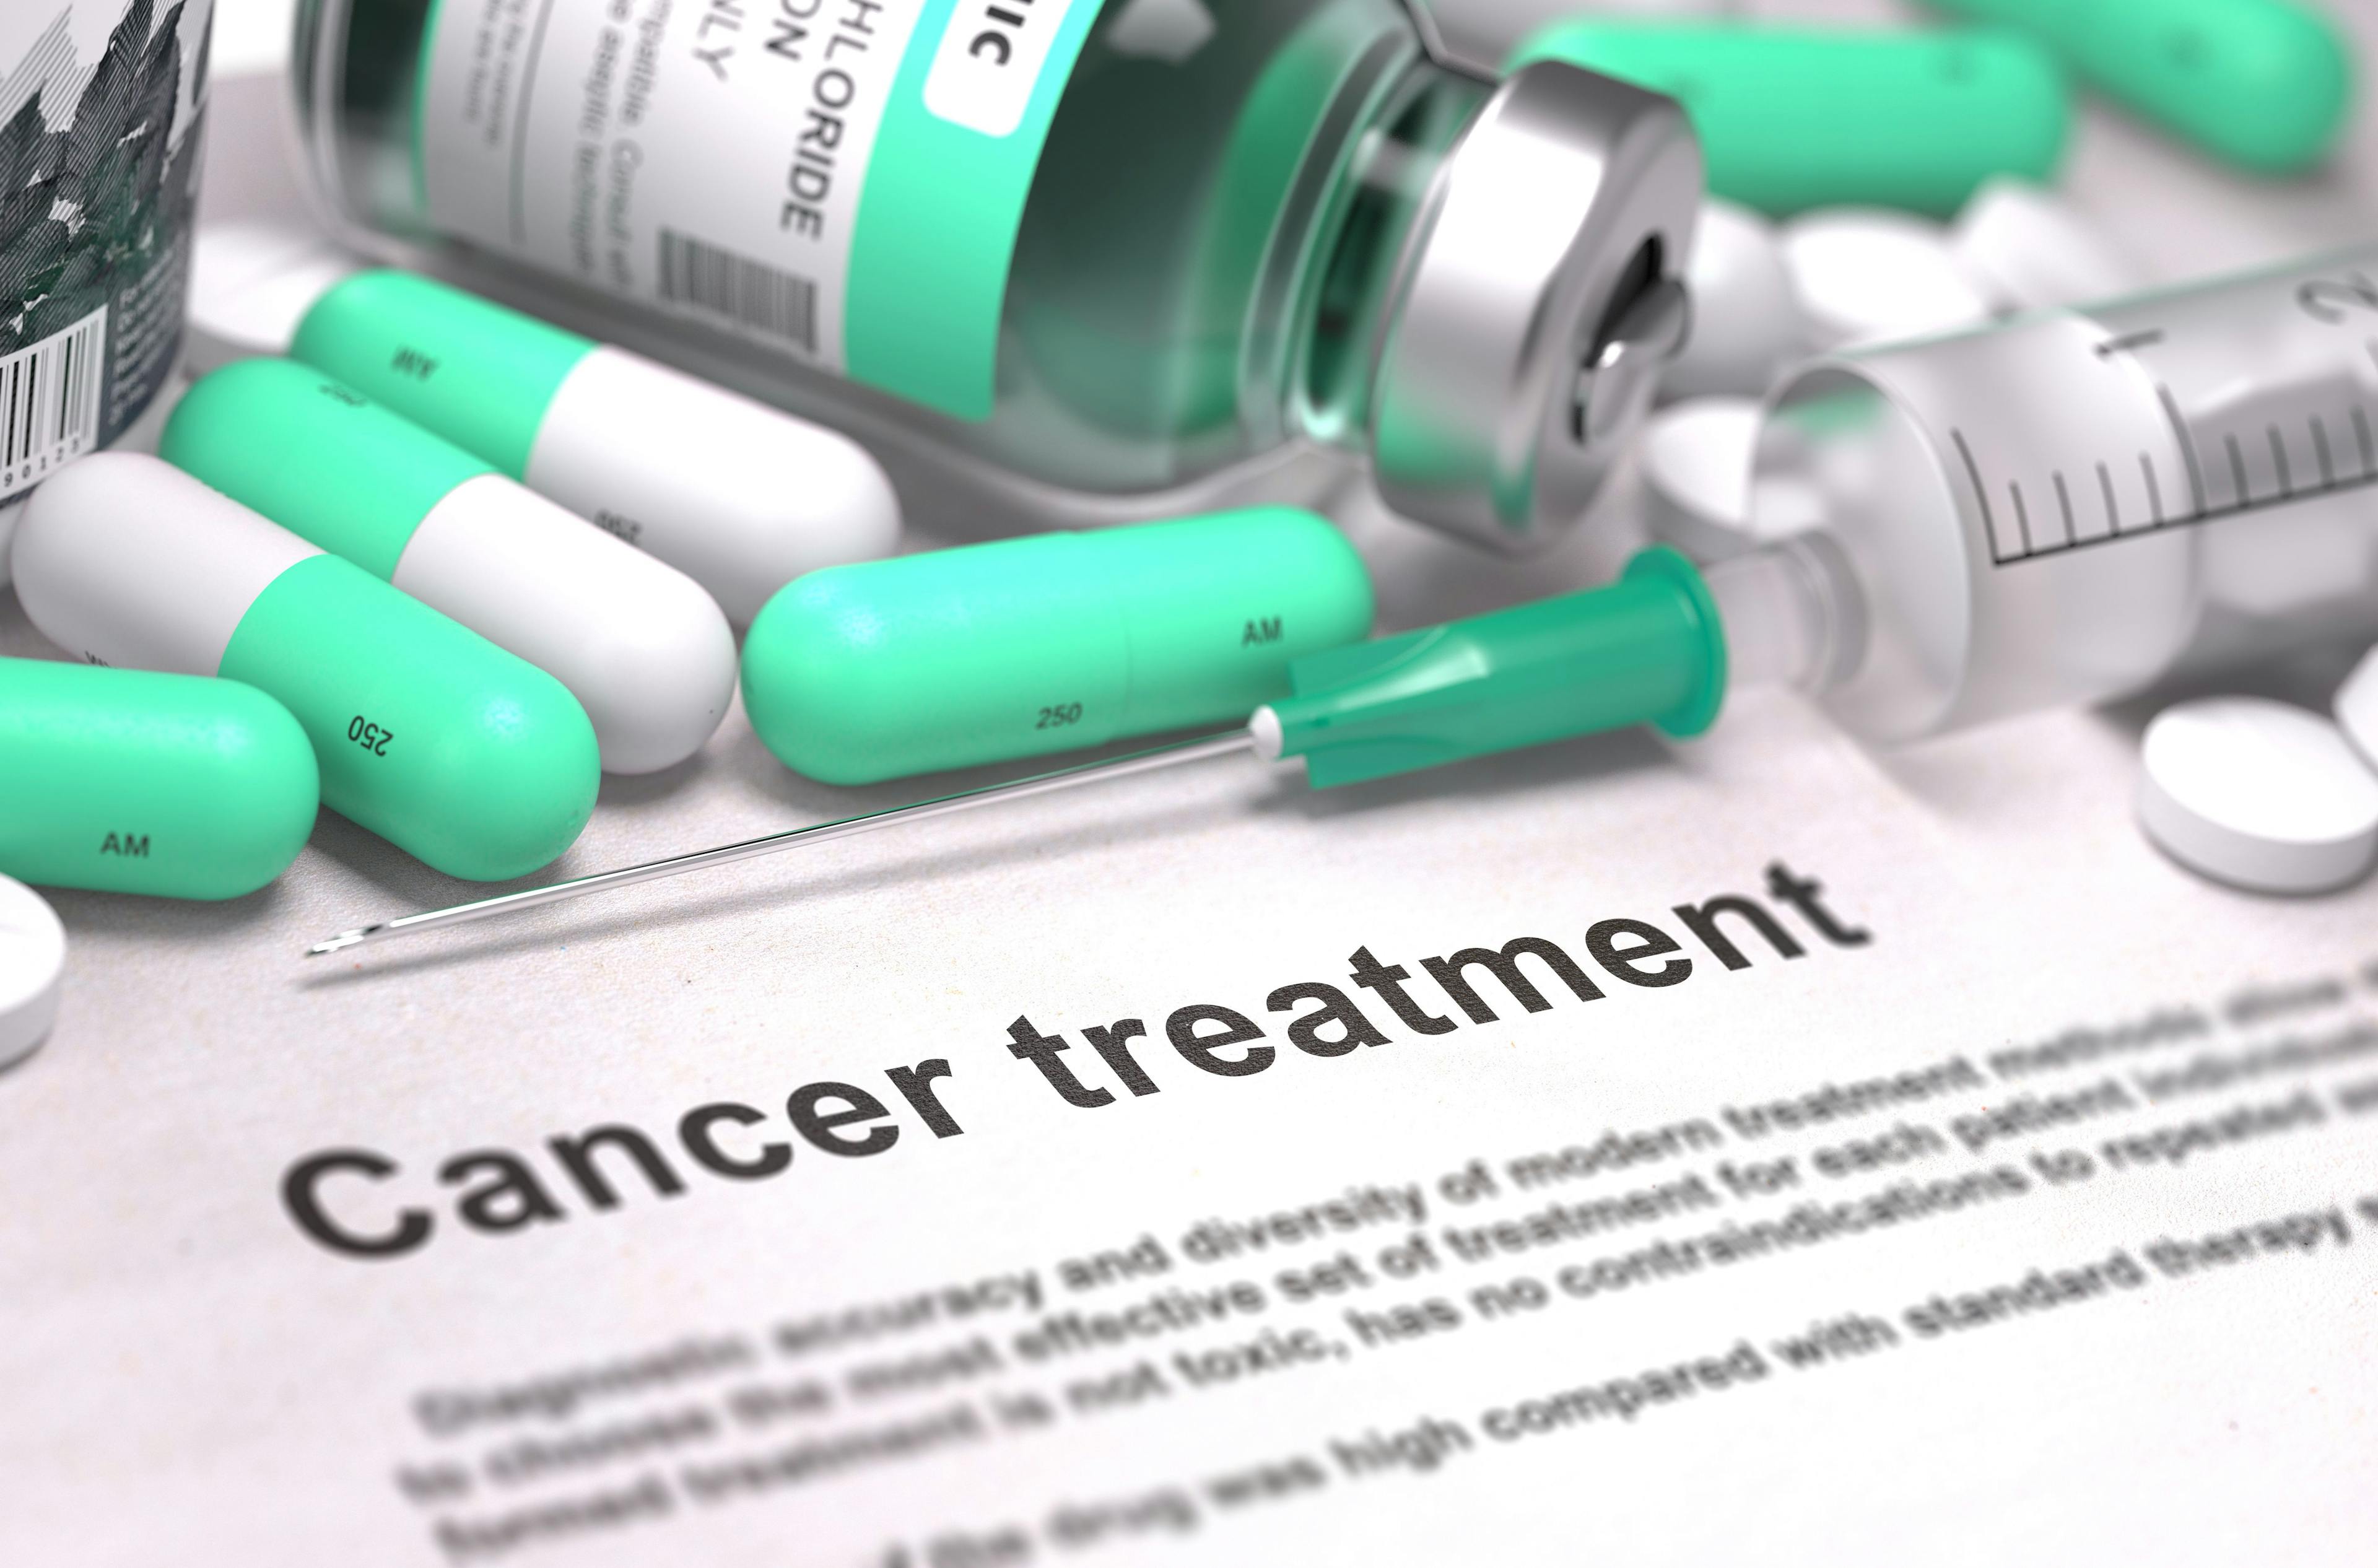 Cancer treatment form with pils and vials | Image credit: © tashatuvango stock.adobe.com